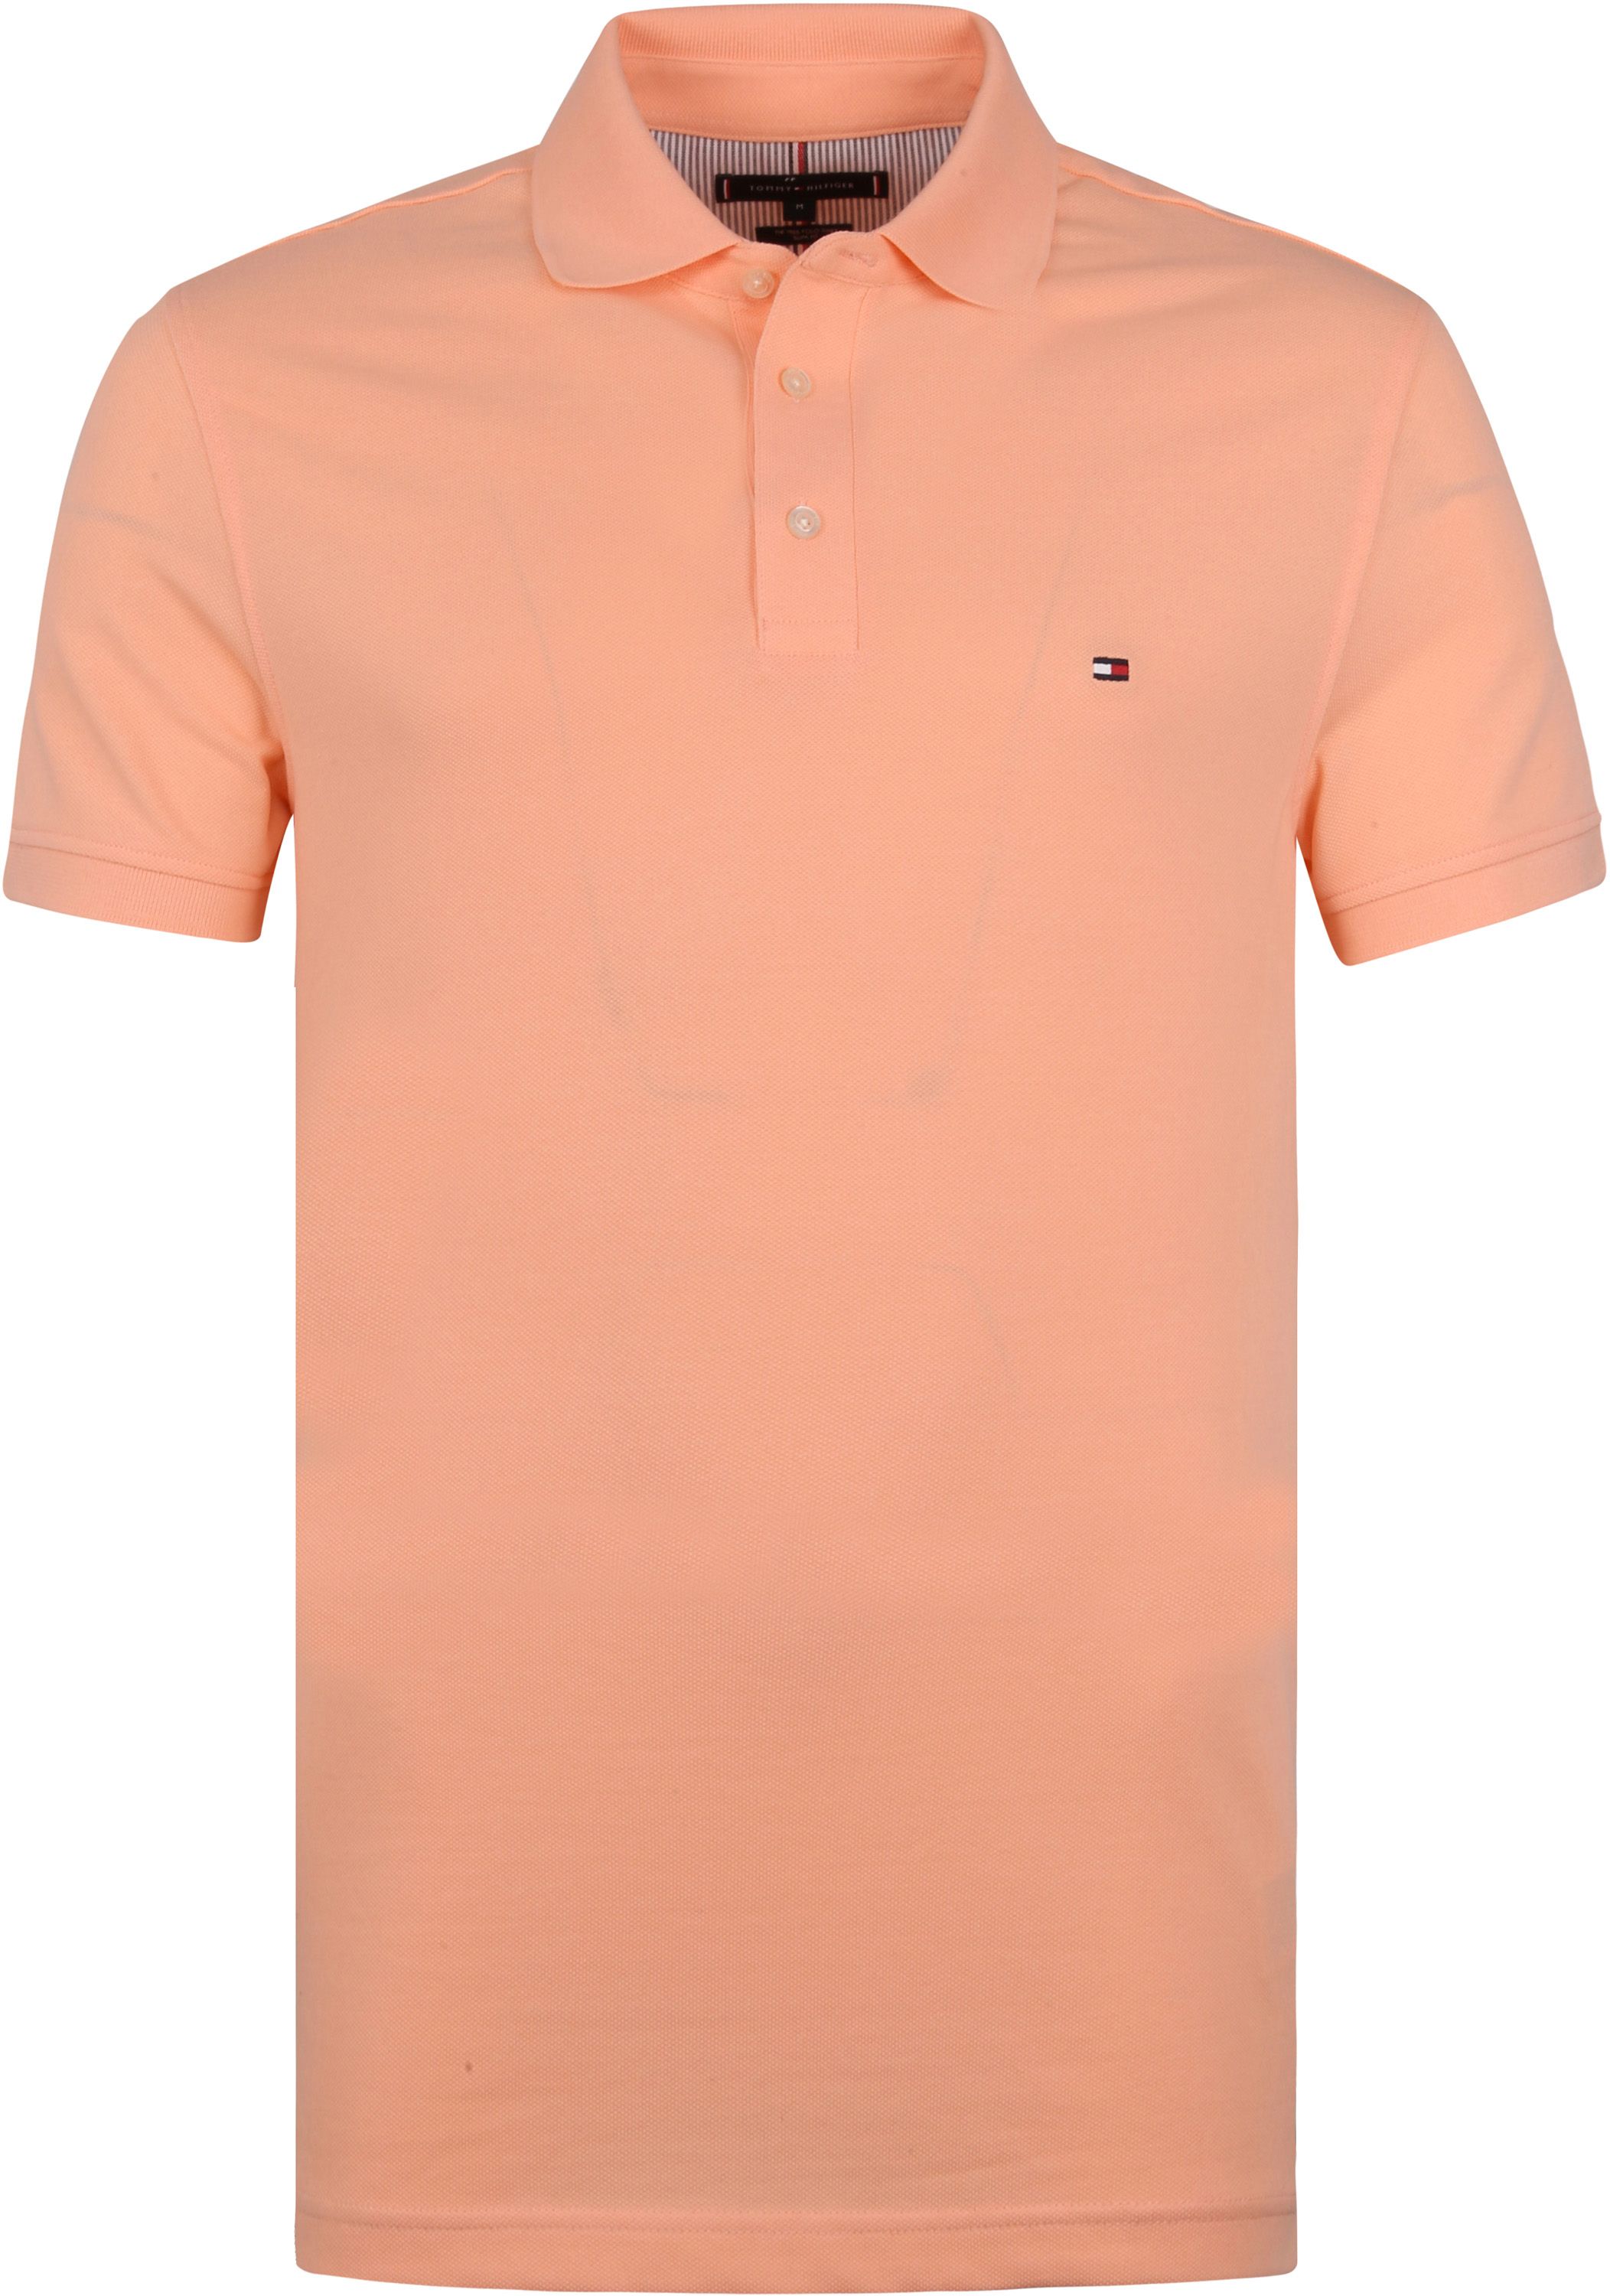 Tommy Hilfiger Polo Shirt 1985 Pink size 3XL